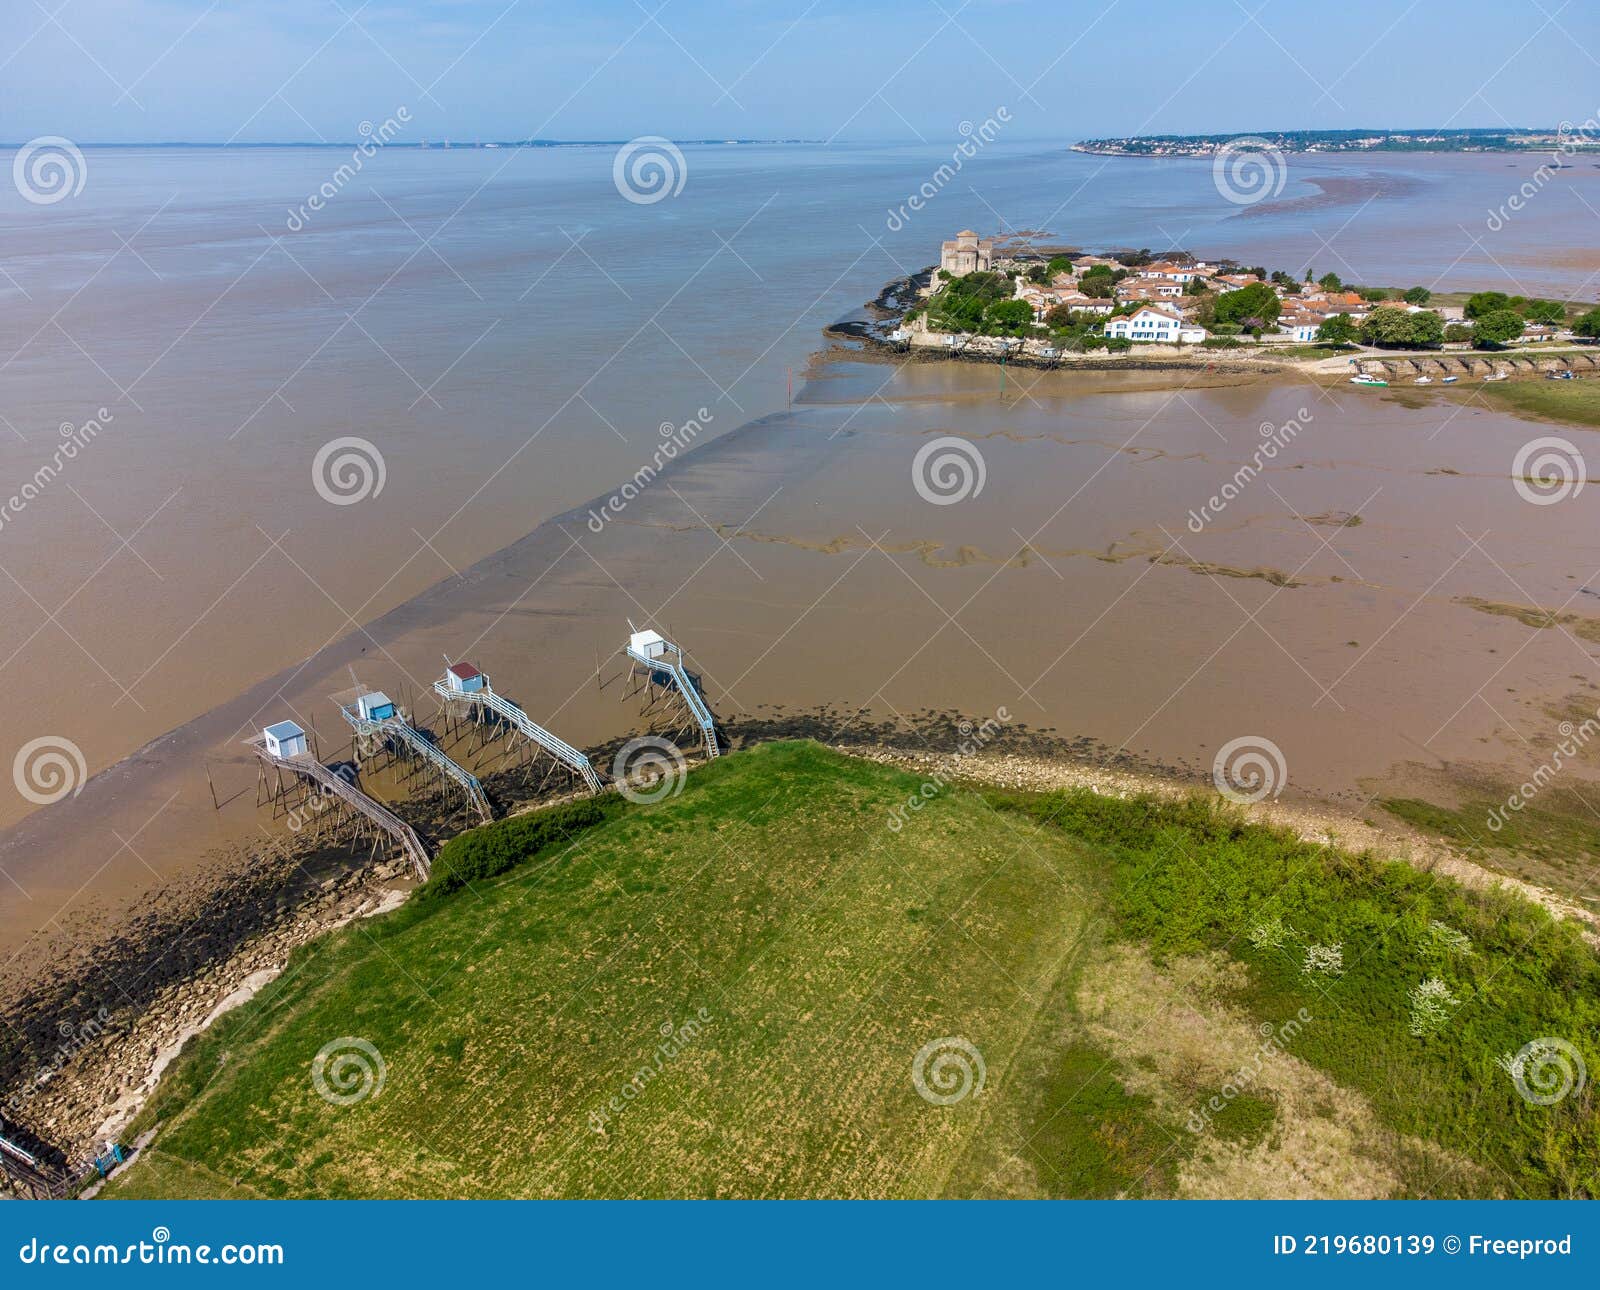 https://thumbs.dreamstime.com/z/aerial-view-typical-landscape-fishing-cabin-sea-pier-net-talmon-gironde-estuary-west-coast-france-high-219680139.jpg